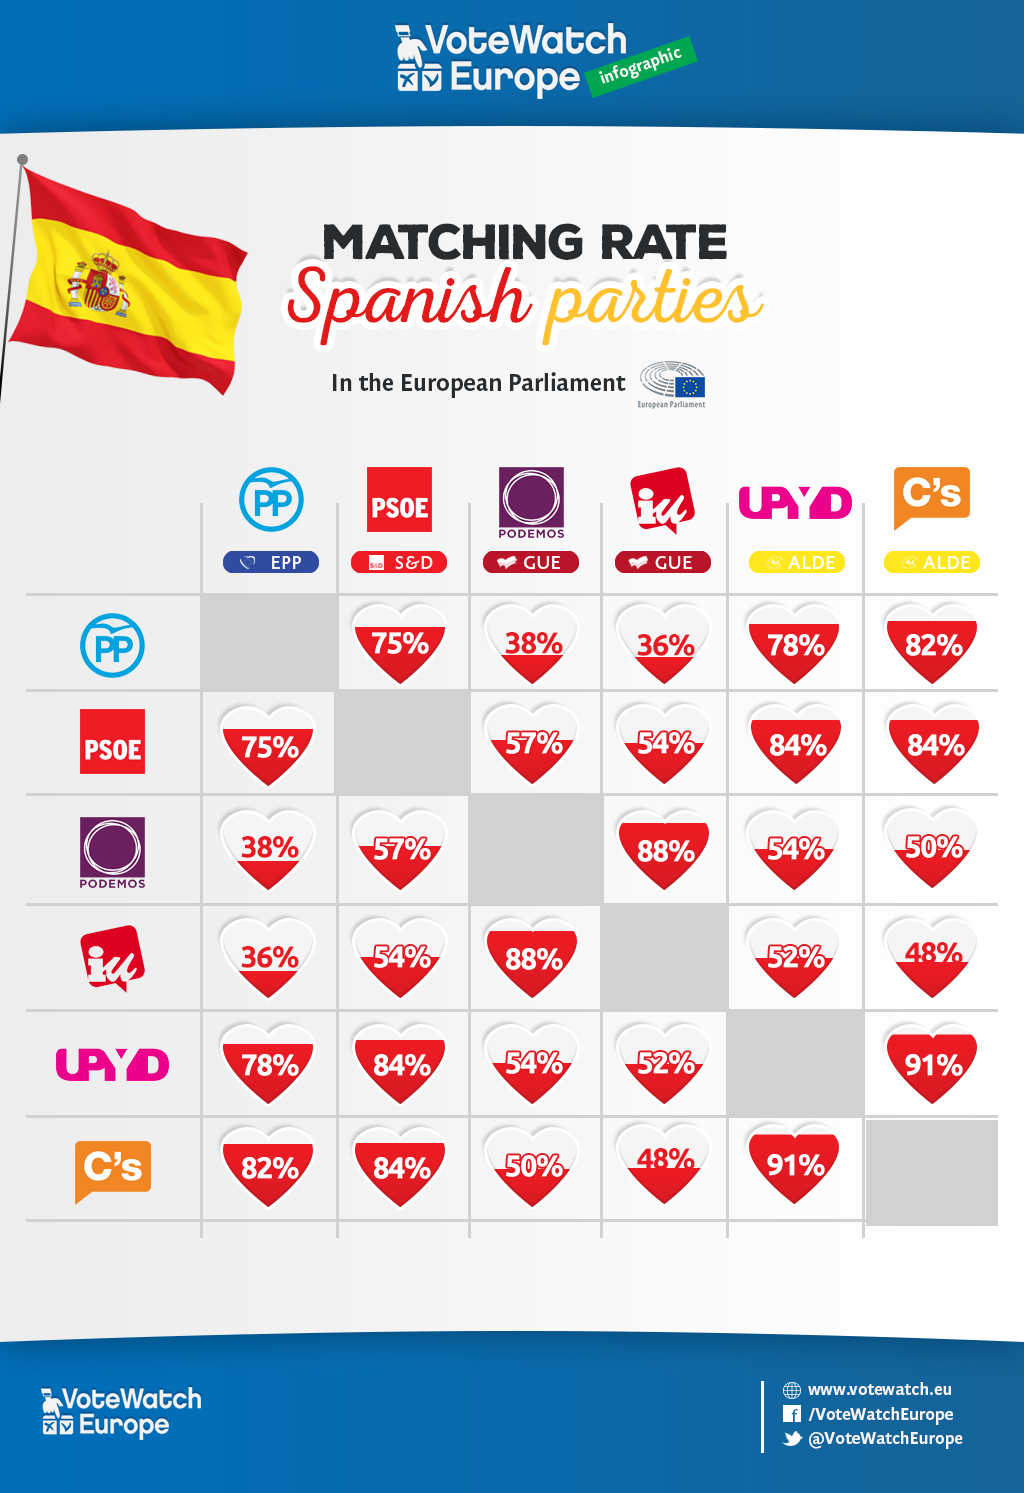 Spanishparties_infographic_matchingrate